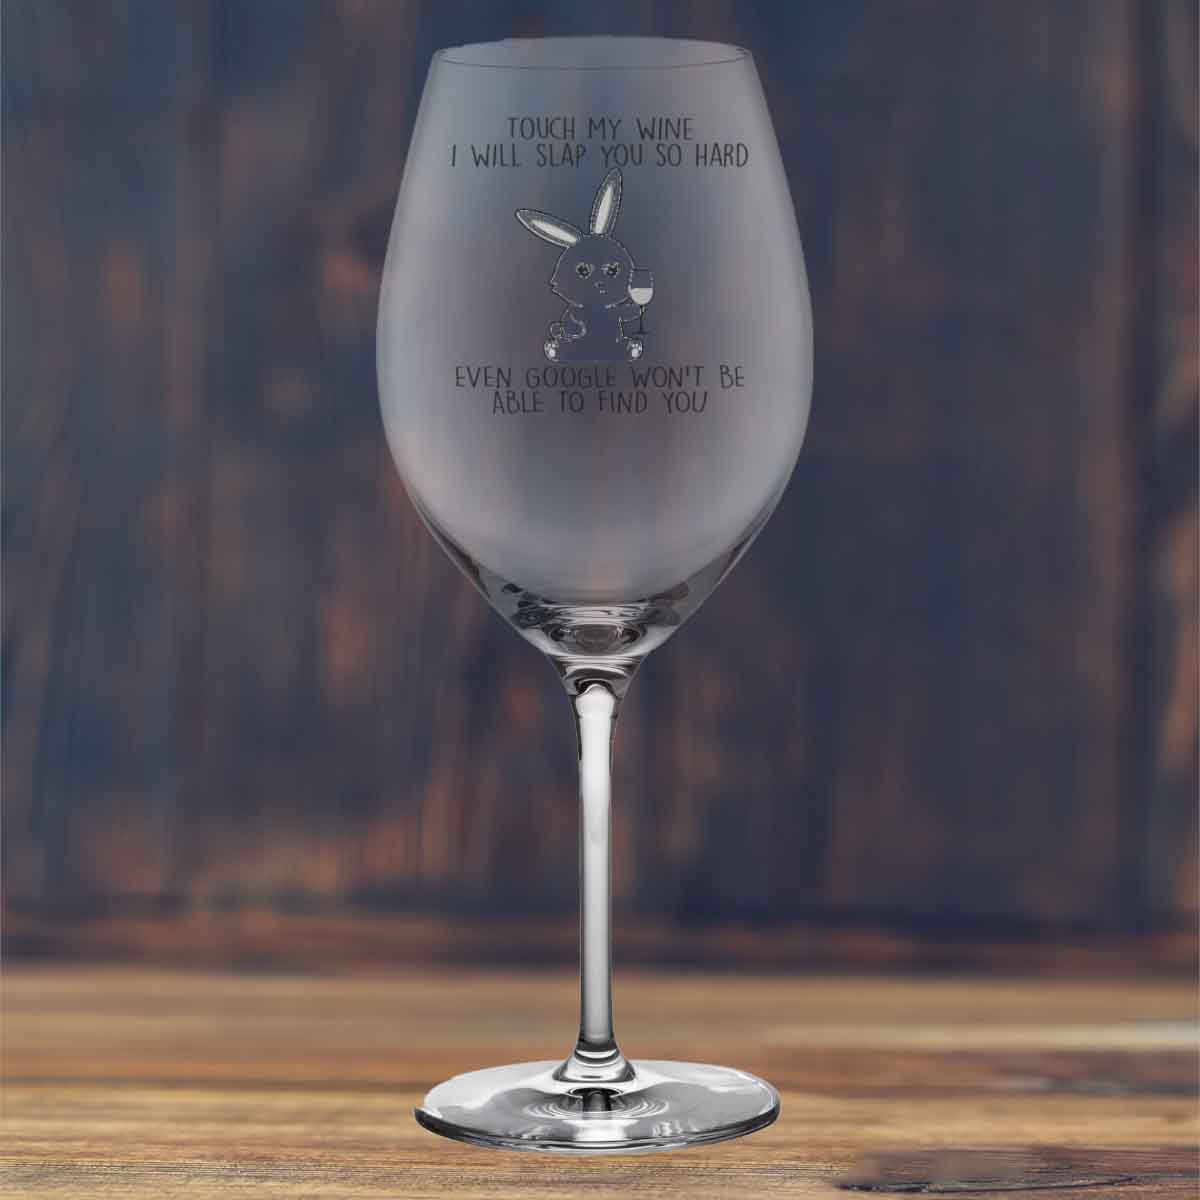 Wine Cute Bunny - Wine glass